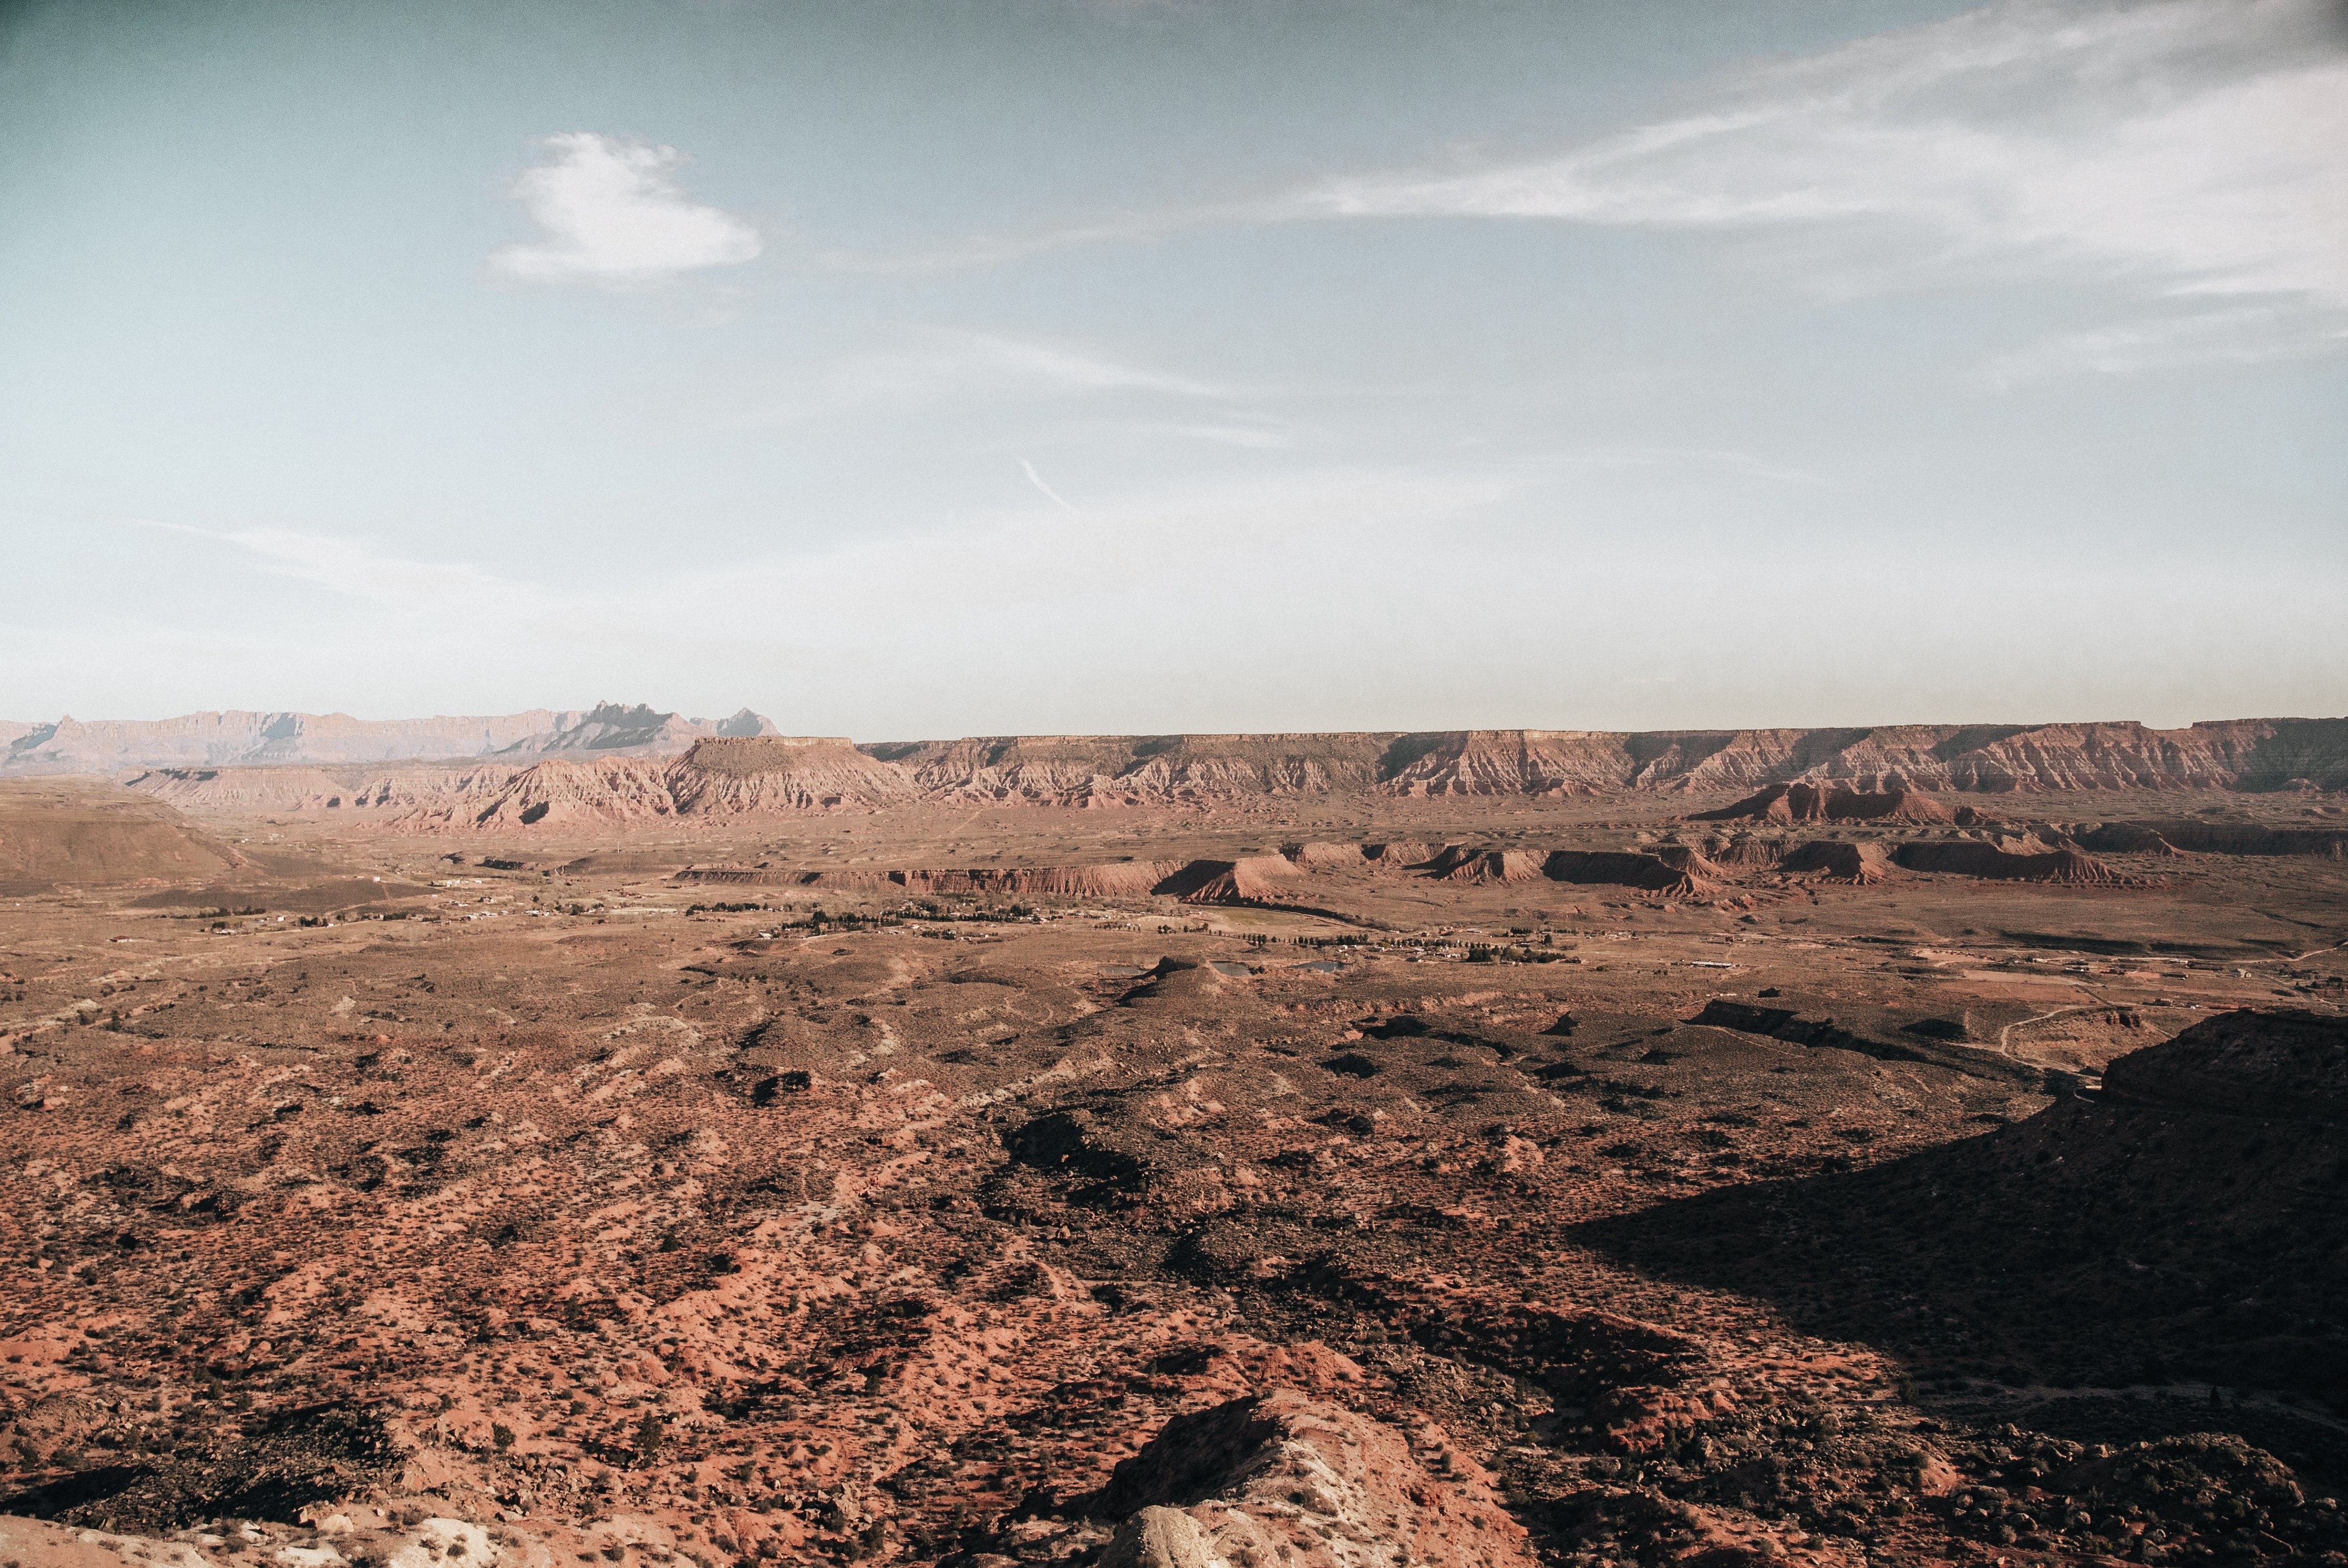 Foto Pemandangan Gurun Arizona